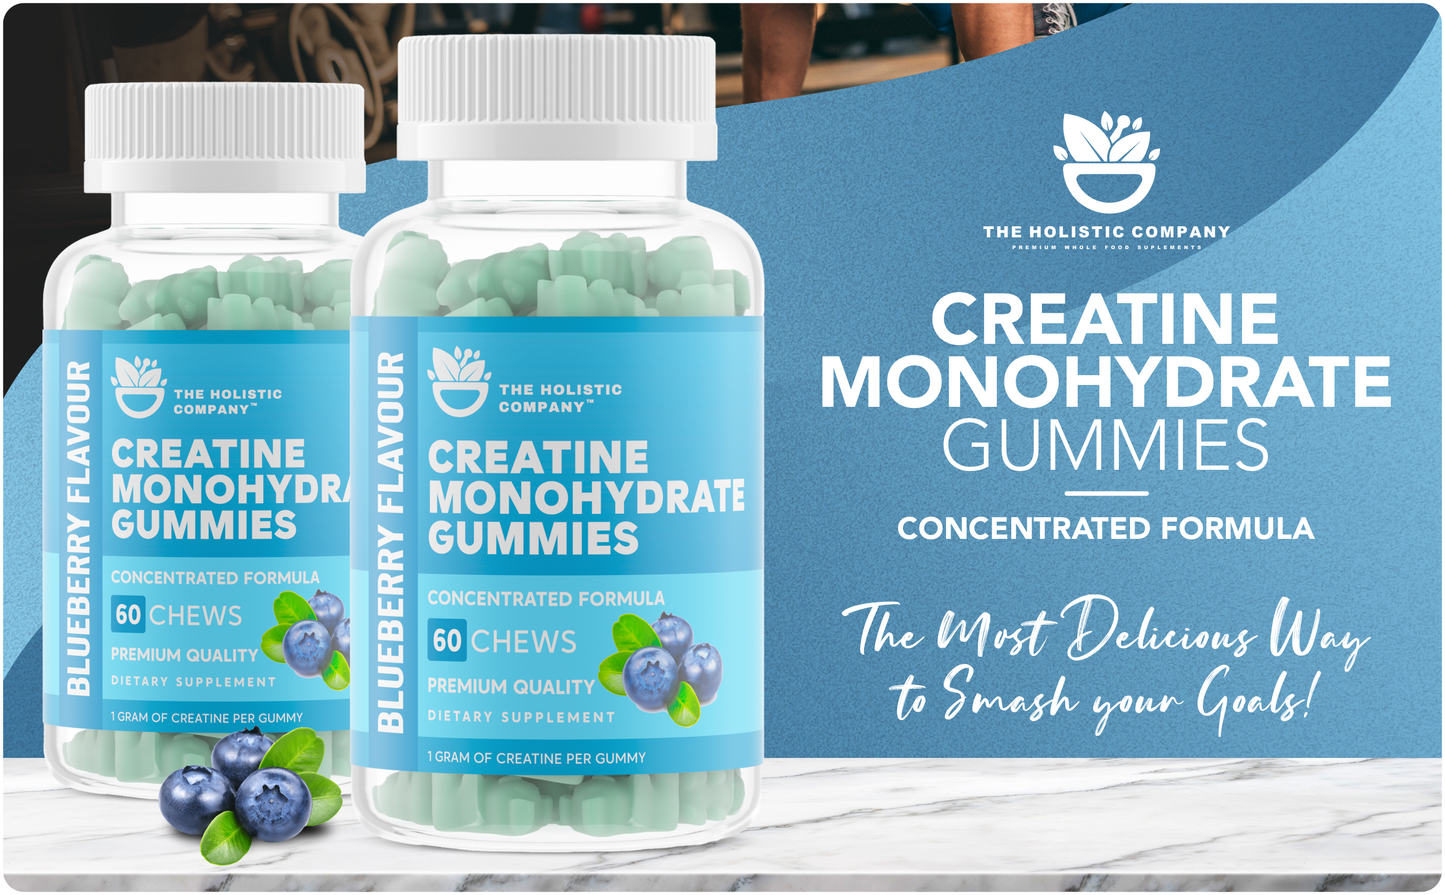 The Holistic Company Creatine Monohydrate Gummies